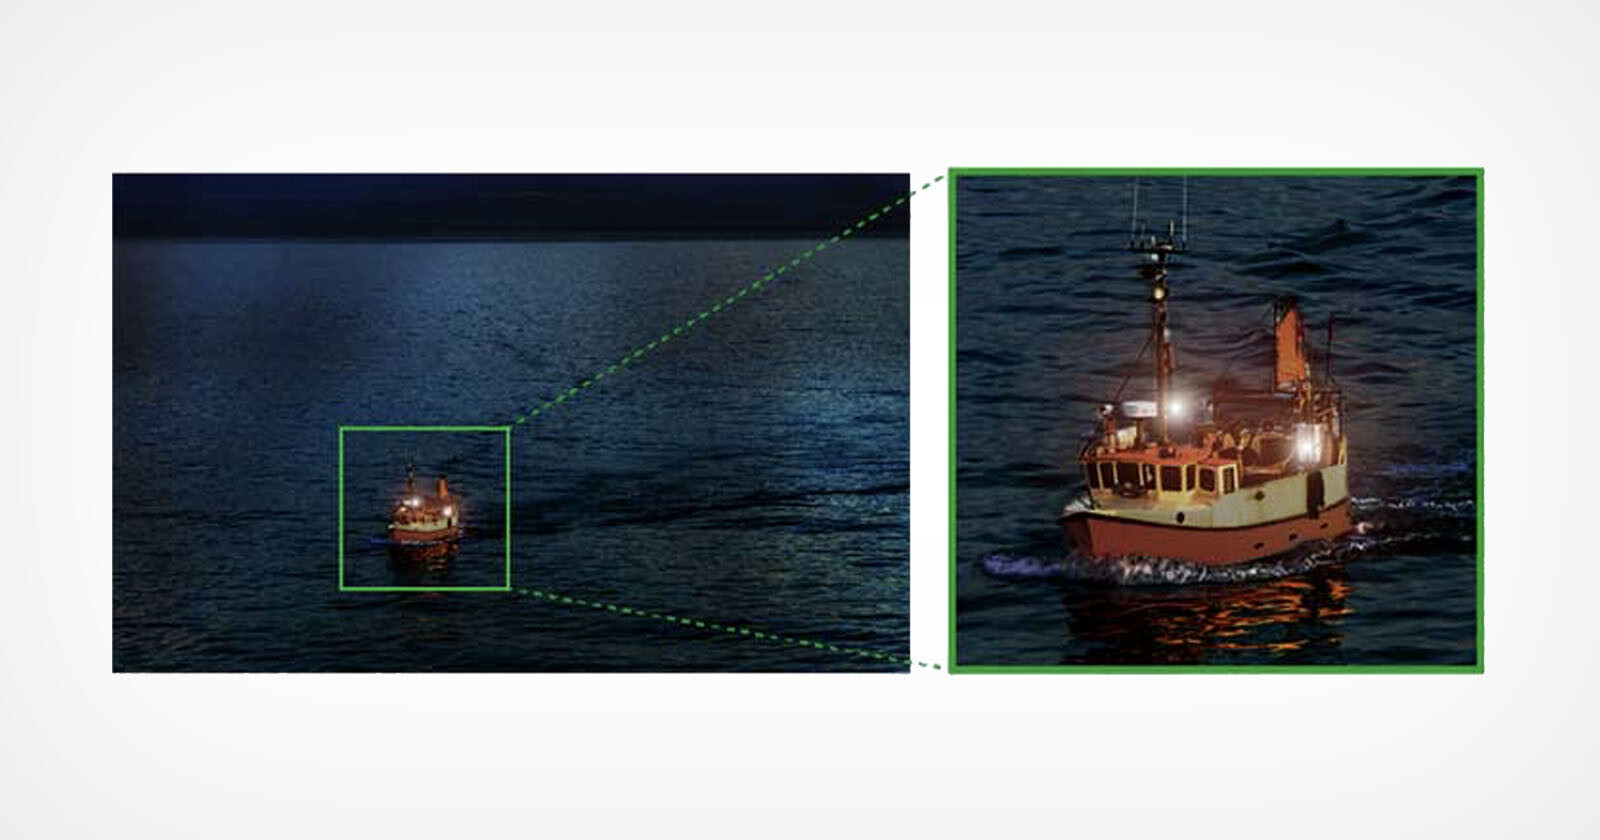 Canons New Camera Enables Long-Range Night Vision Capabilities